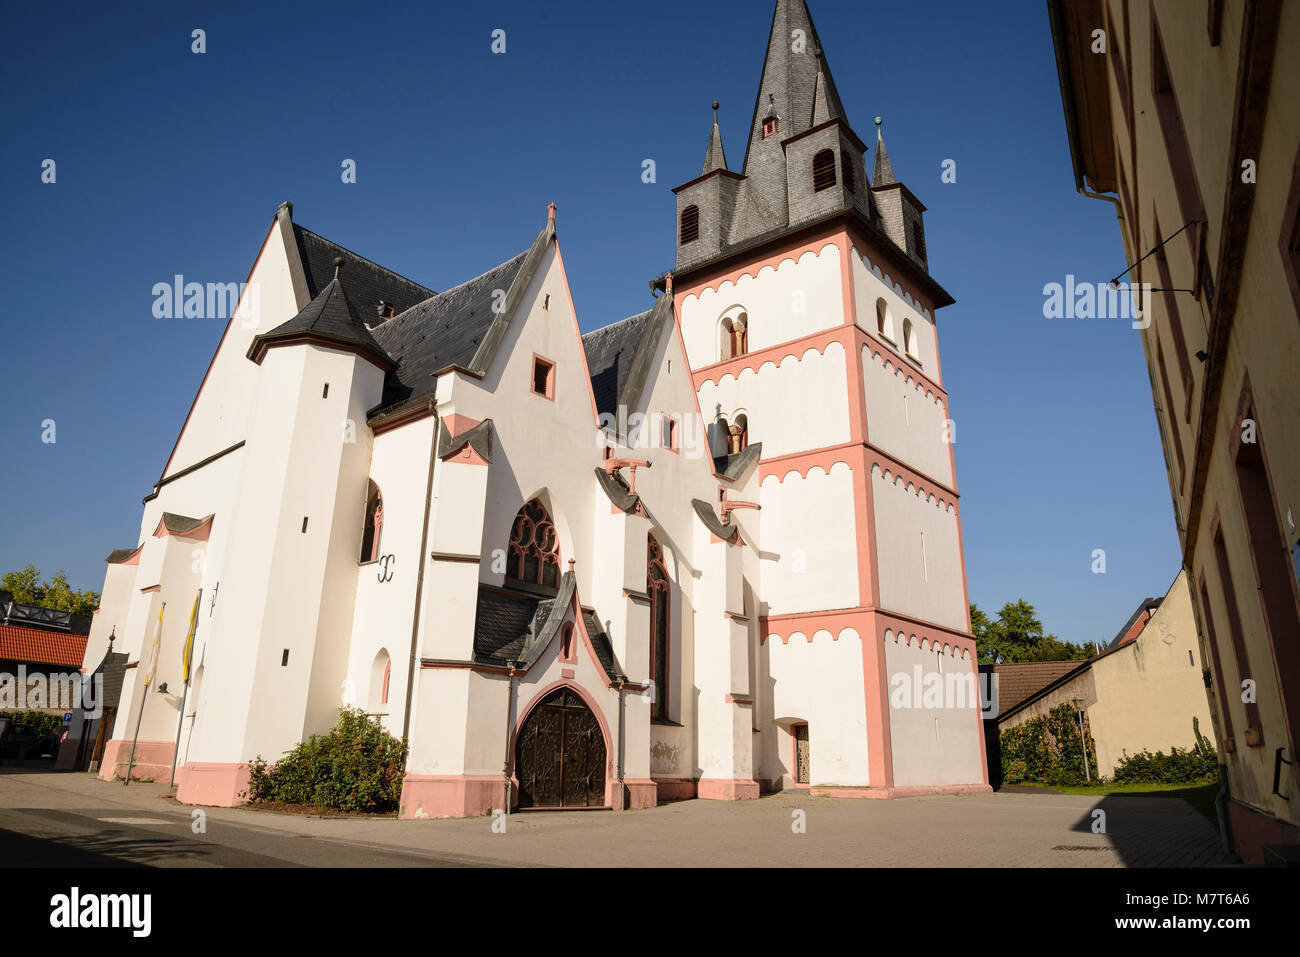 Pfarrkirche San Martin, la città di Oestrich-Winkel, Rheingau, Assia, Deutschland Foto Stock